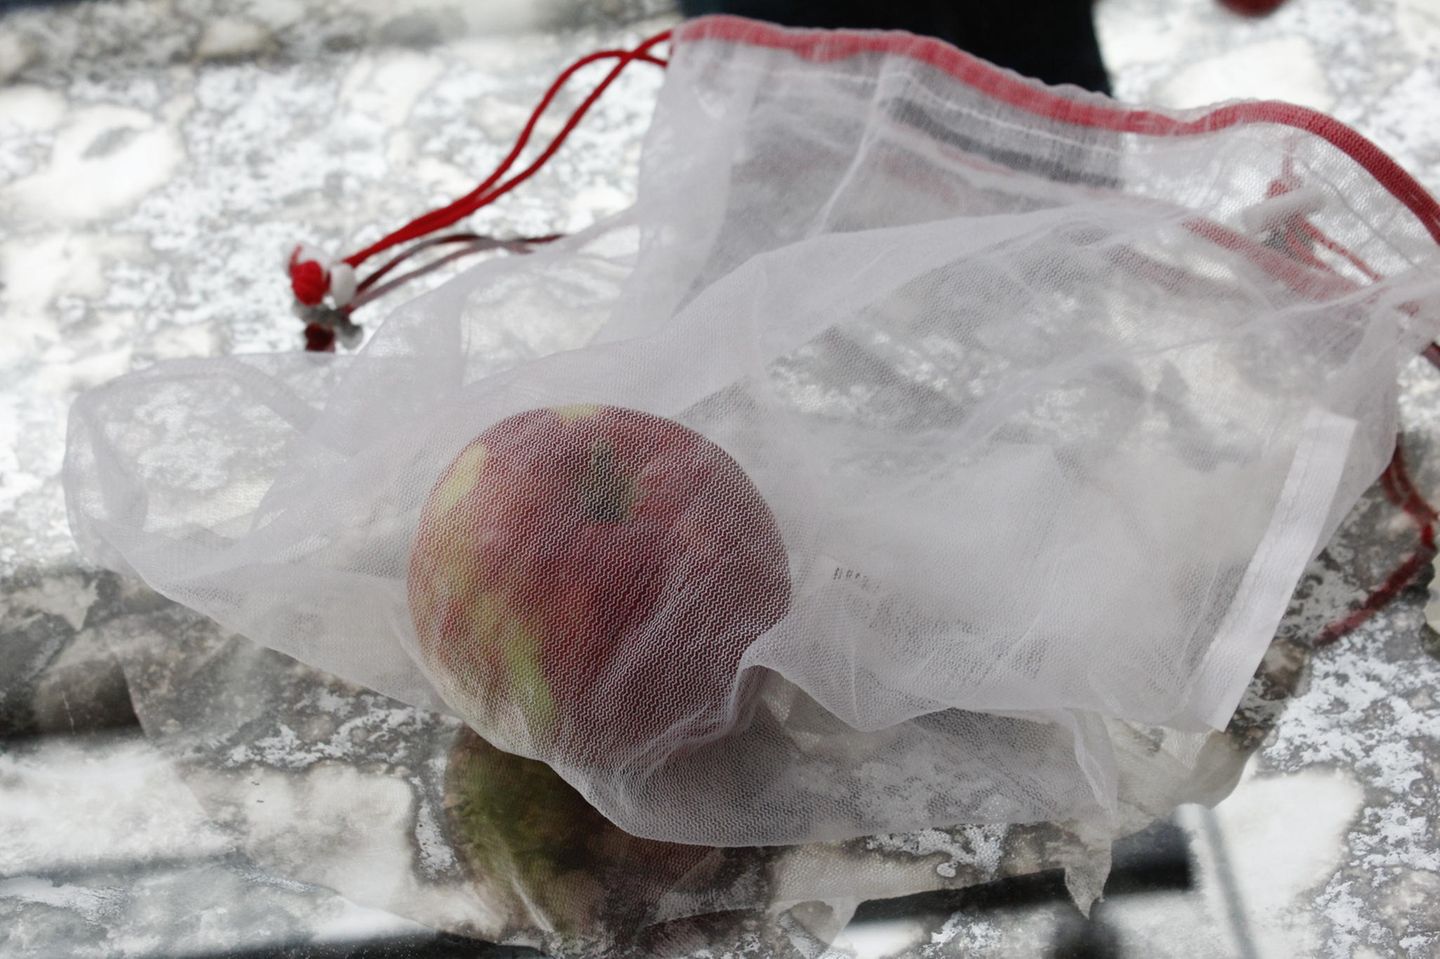 Umweltbewusst leben: Apfel im Netz